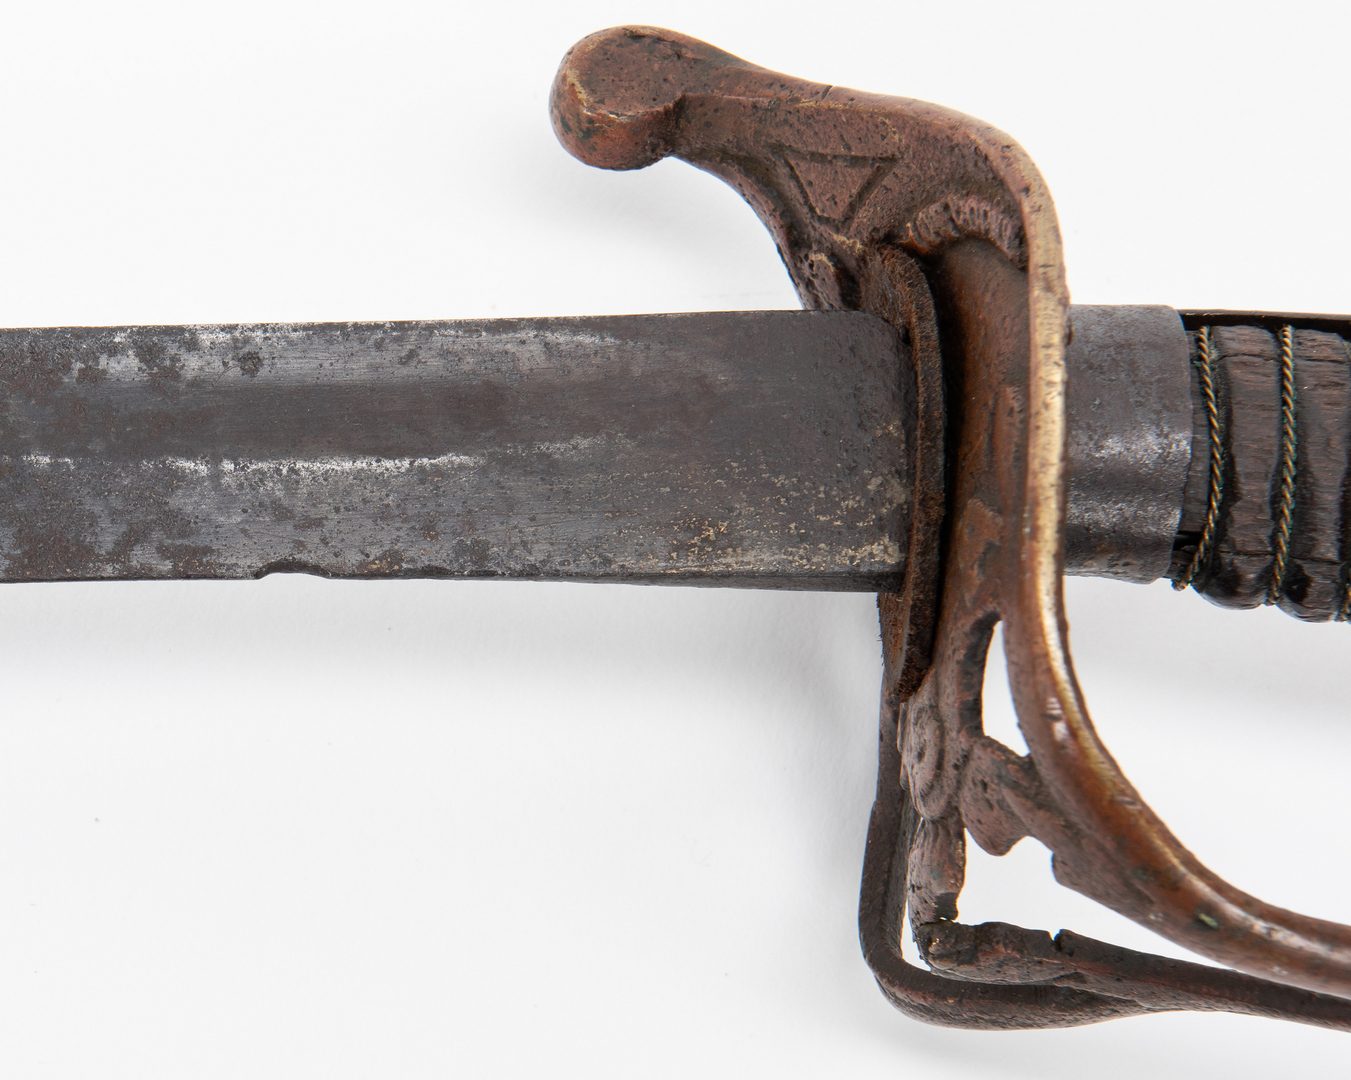 Lot 333: 2 Civil War era Swords, incl. Nashville Plow Works